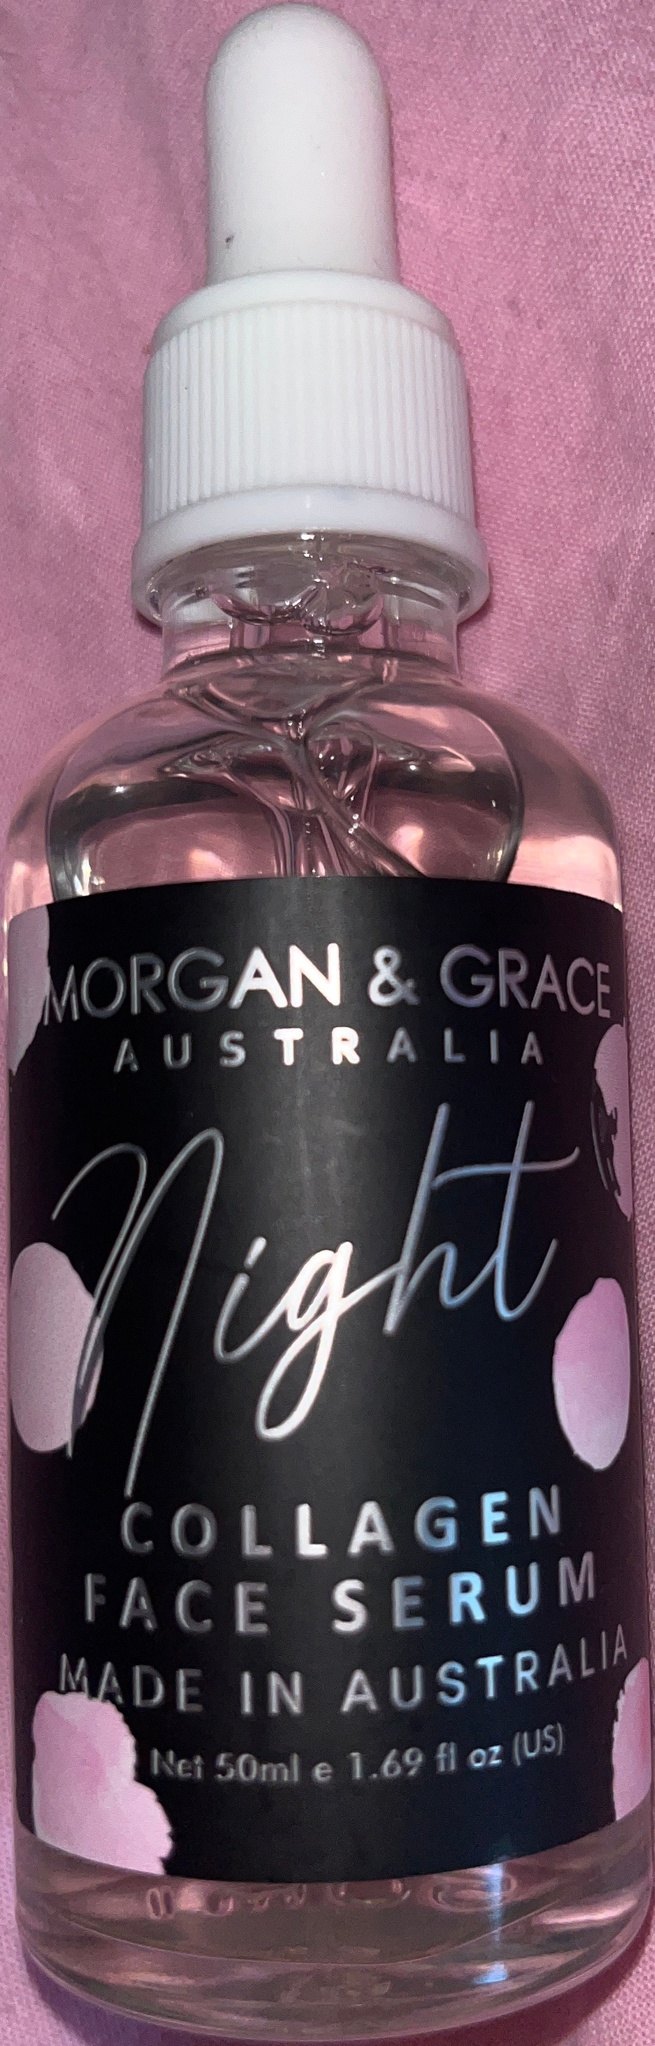 Morgan & grace Night Collagen Face Serum